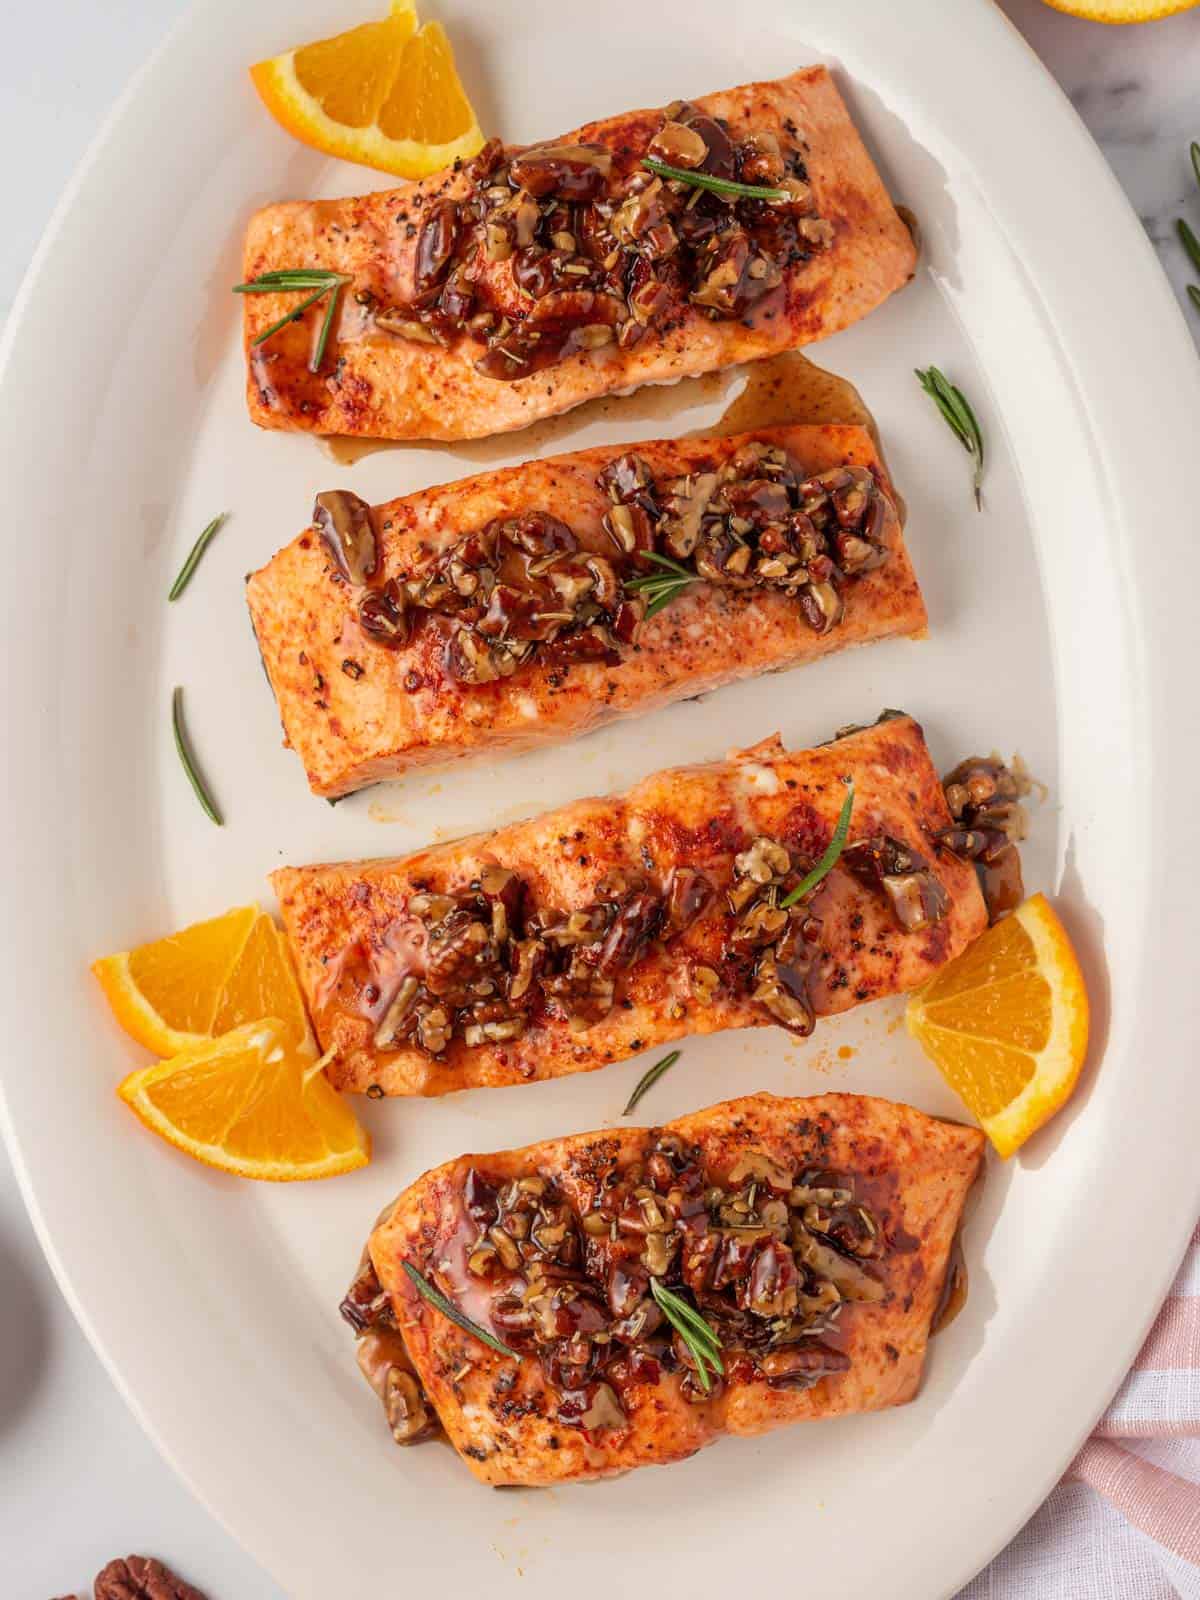 A platter of maple glazed salmon.